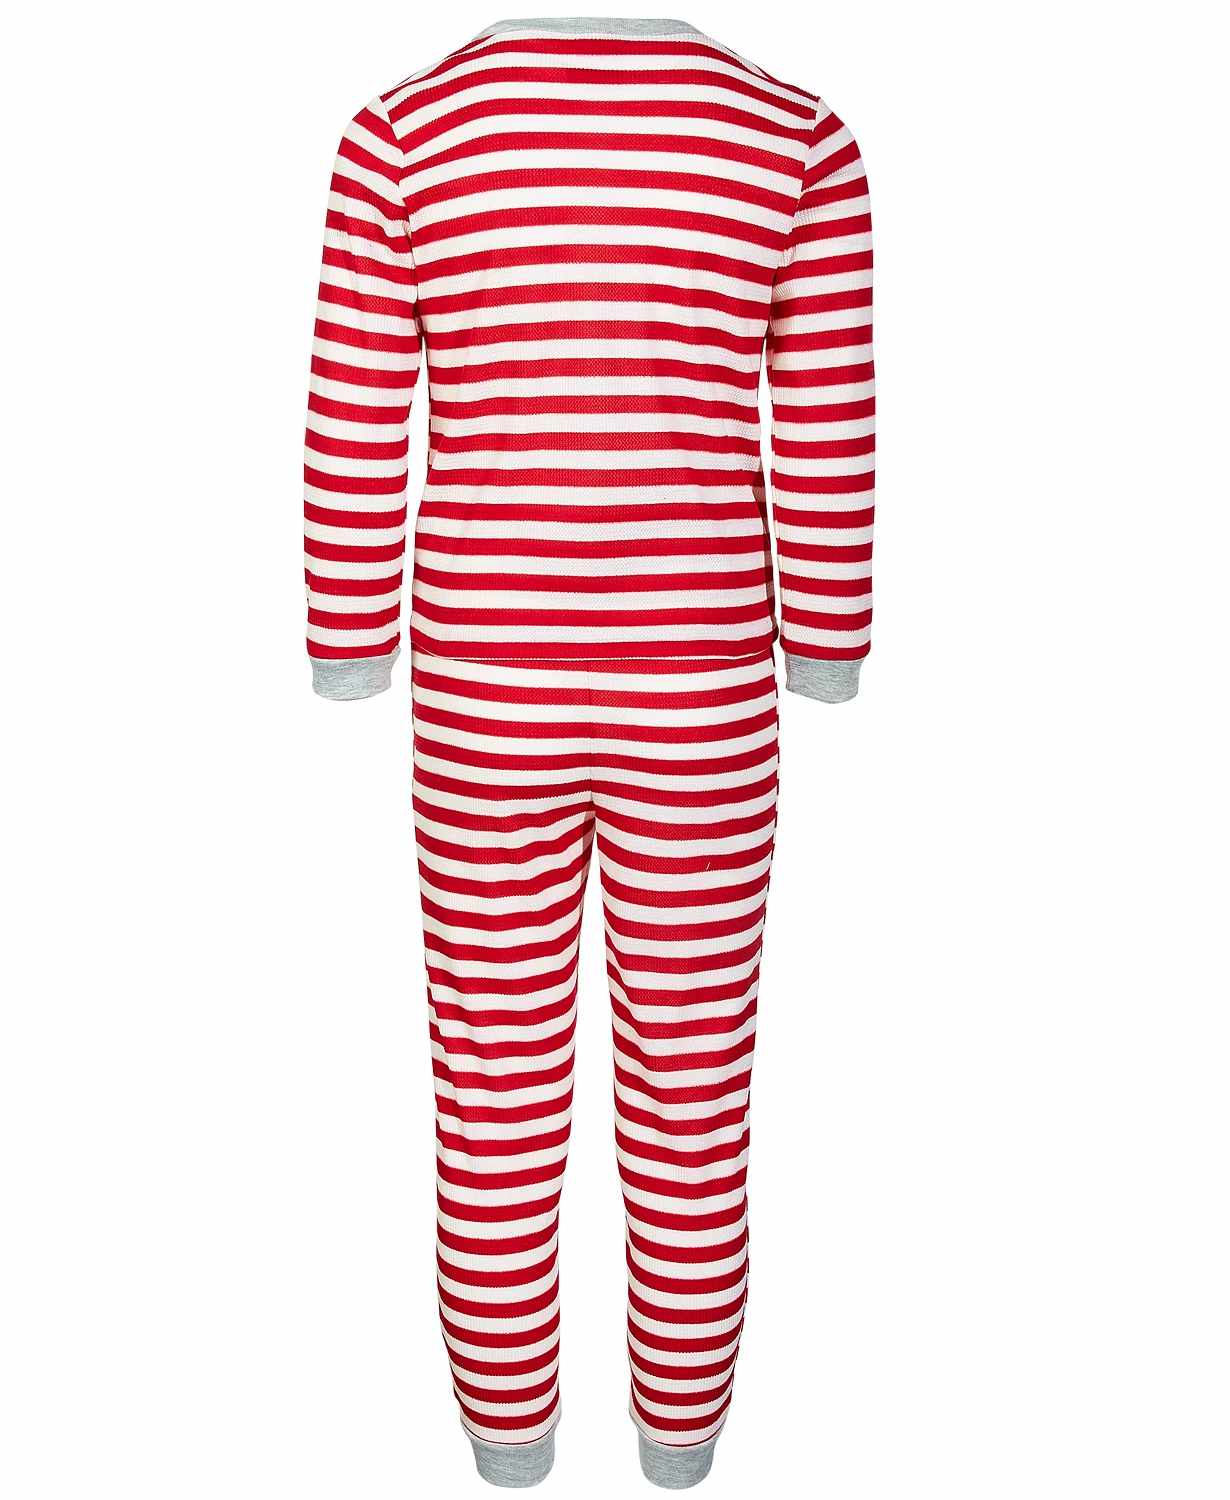 Family Pajamas Little & Big Kids Matching 2-Pieces Striped Pajama Set